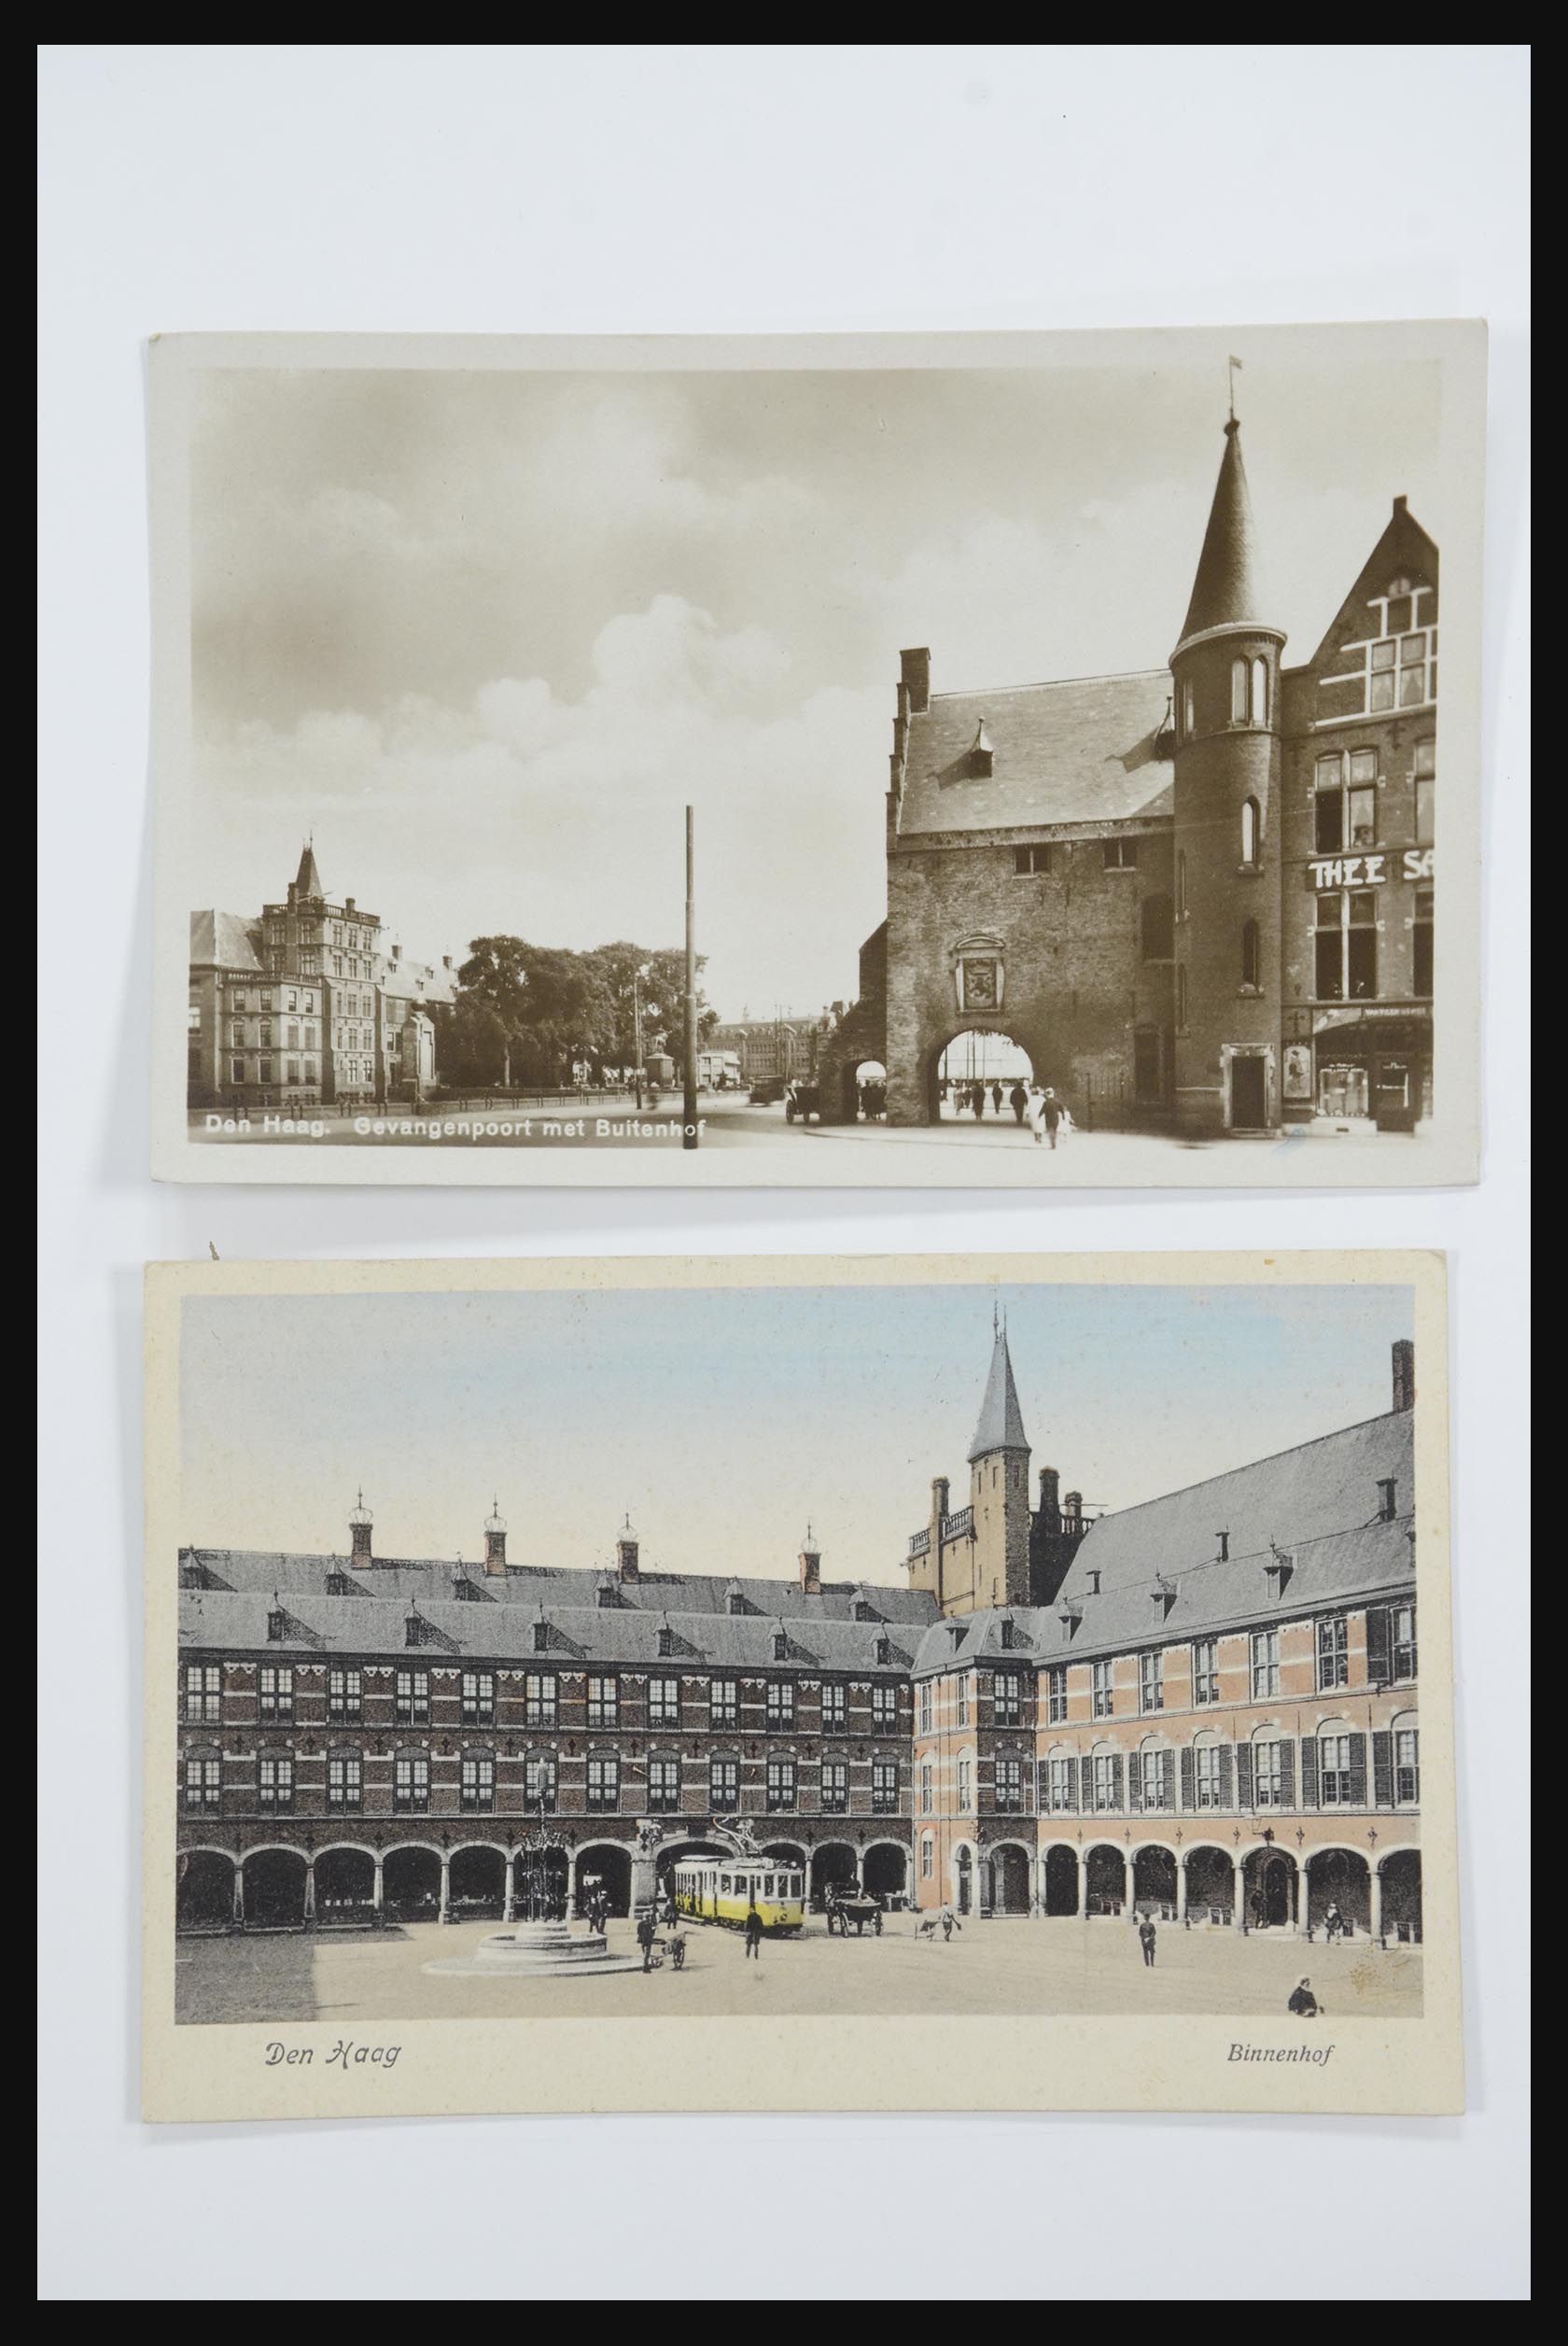 31868 059 - 31868 Netherlands picture postcards.